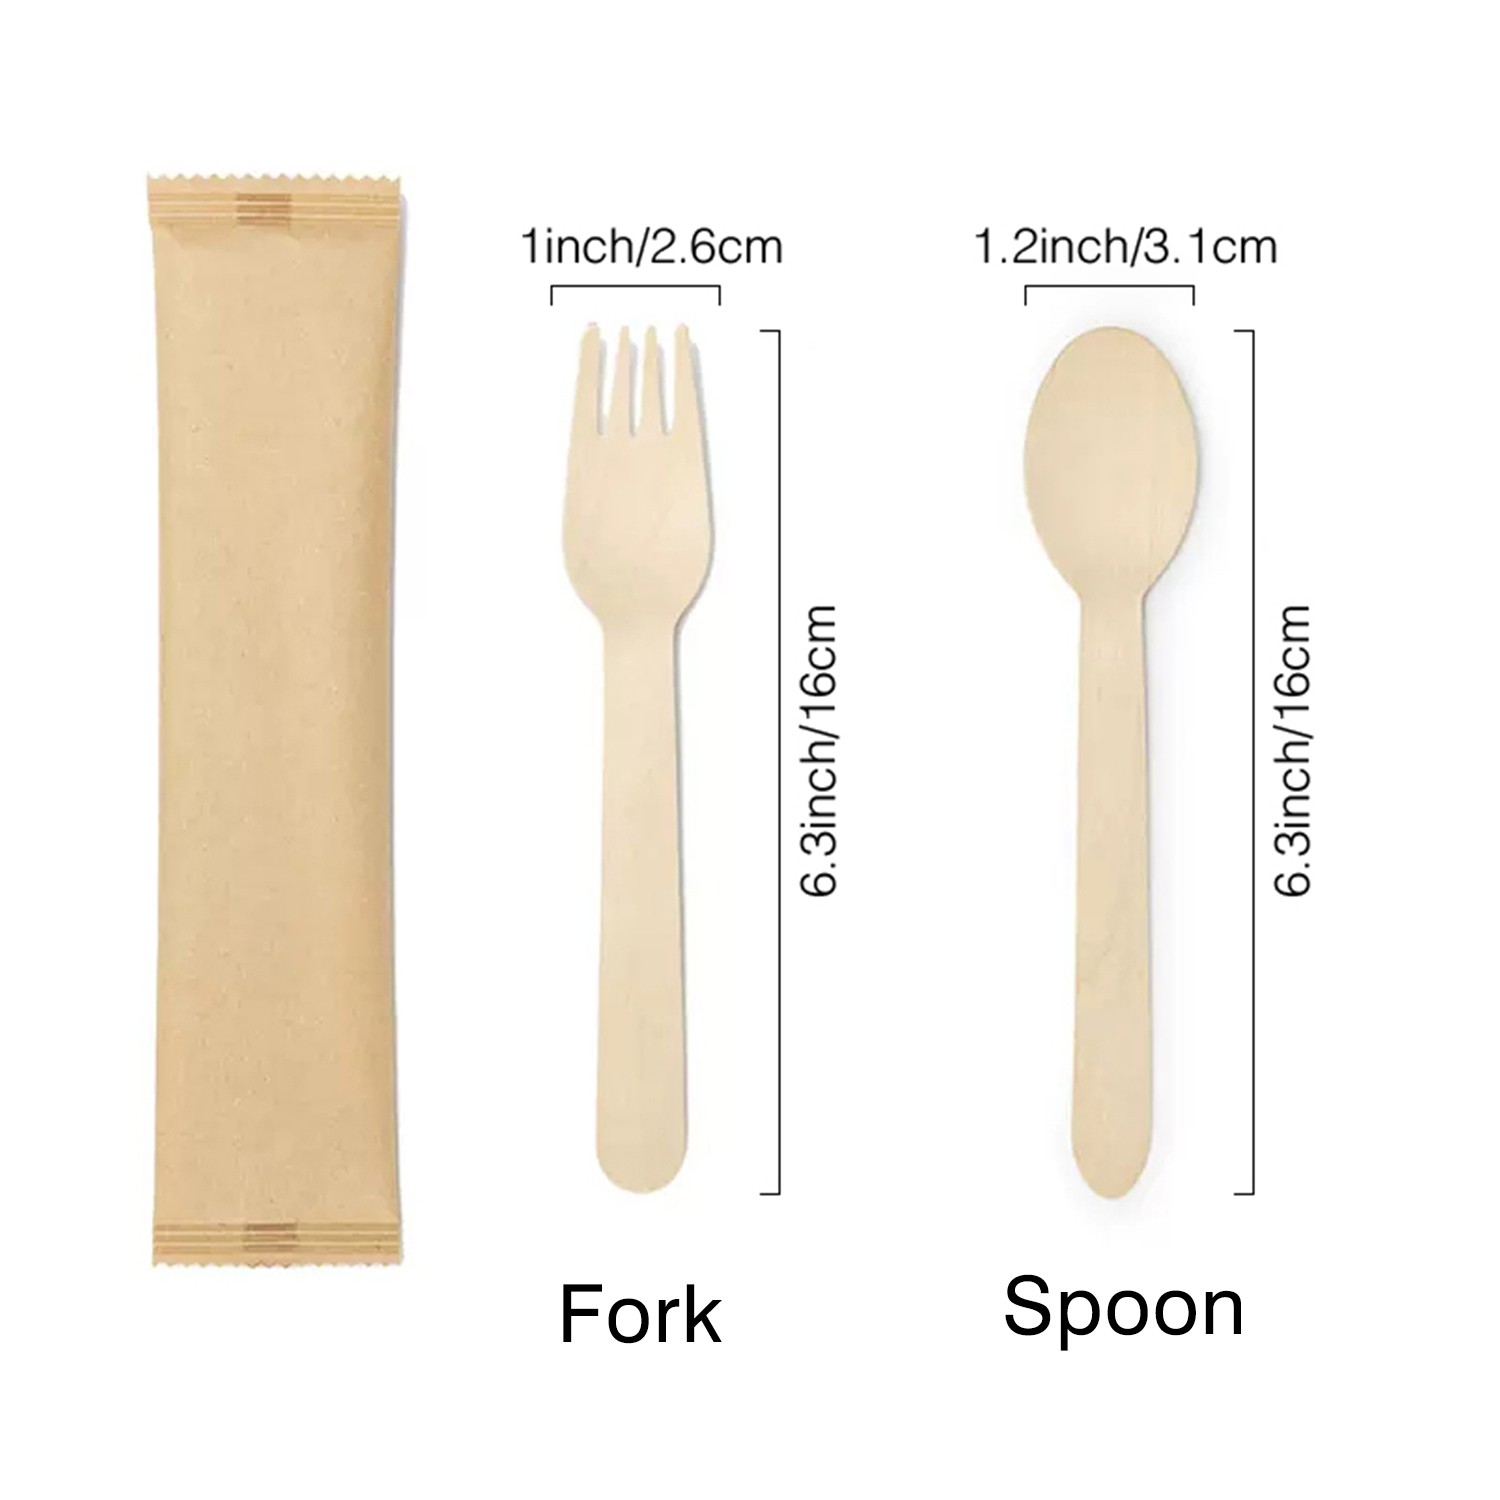 Wooden dining fork